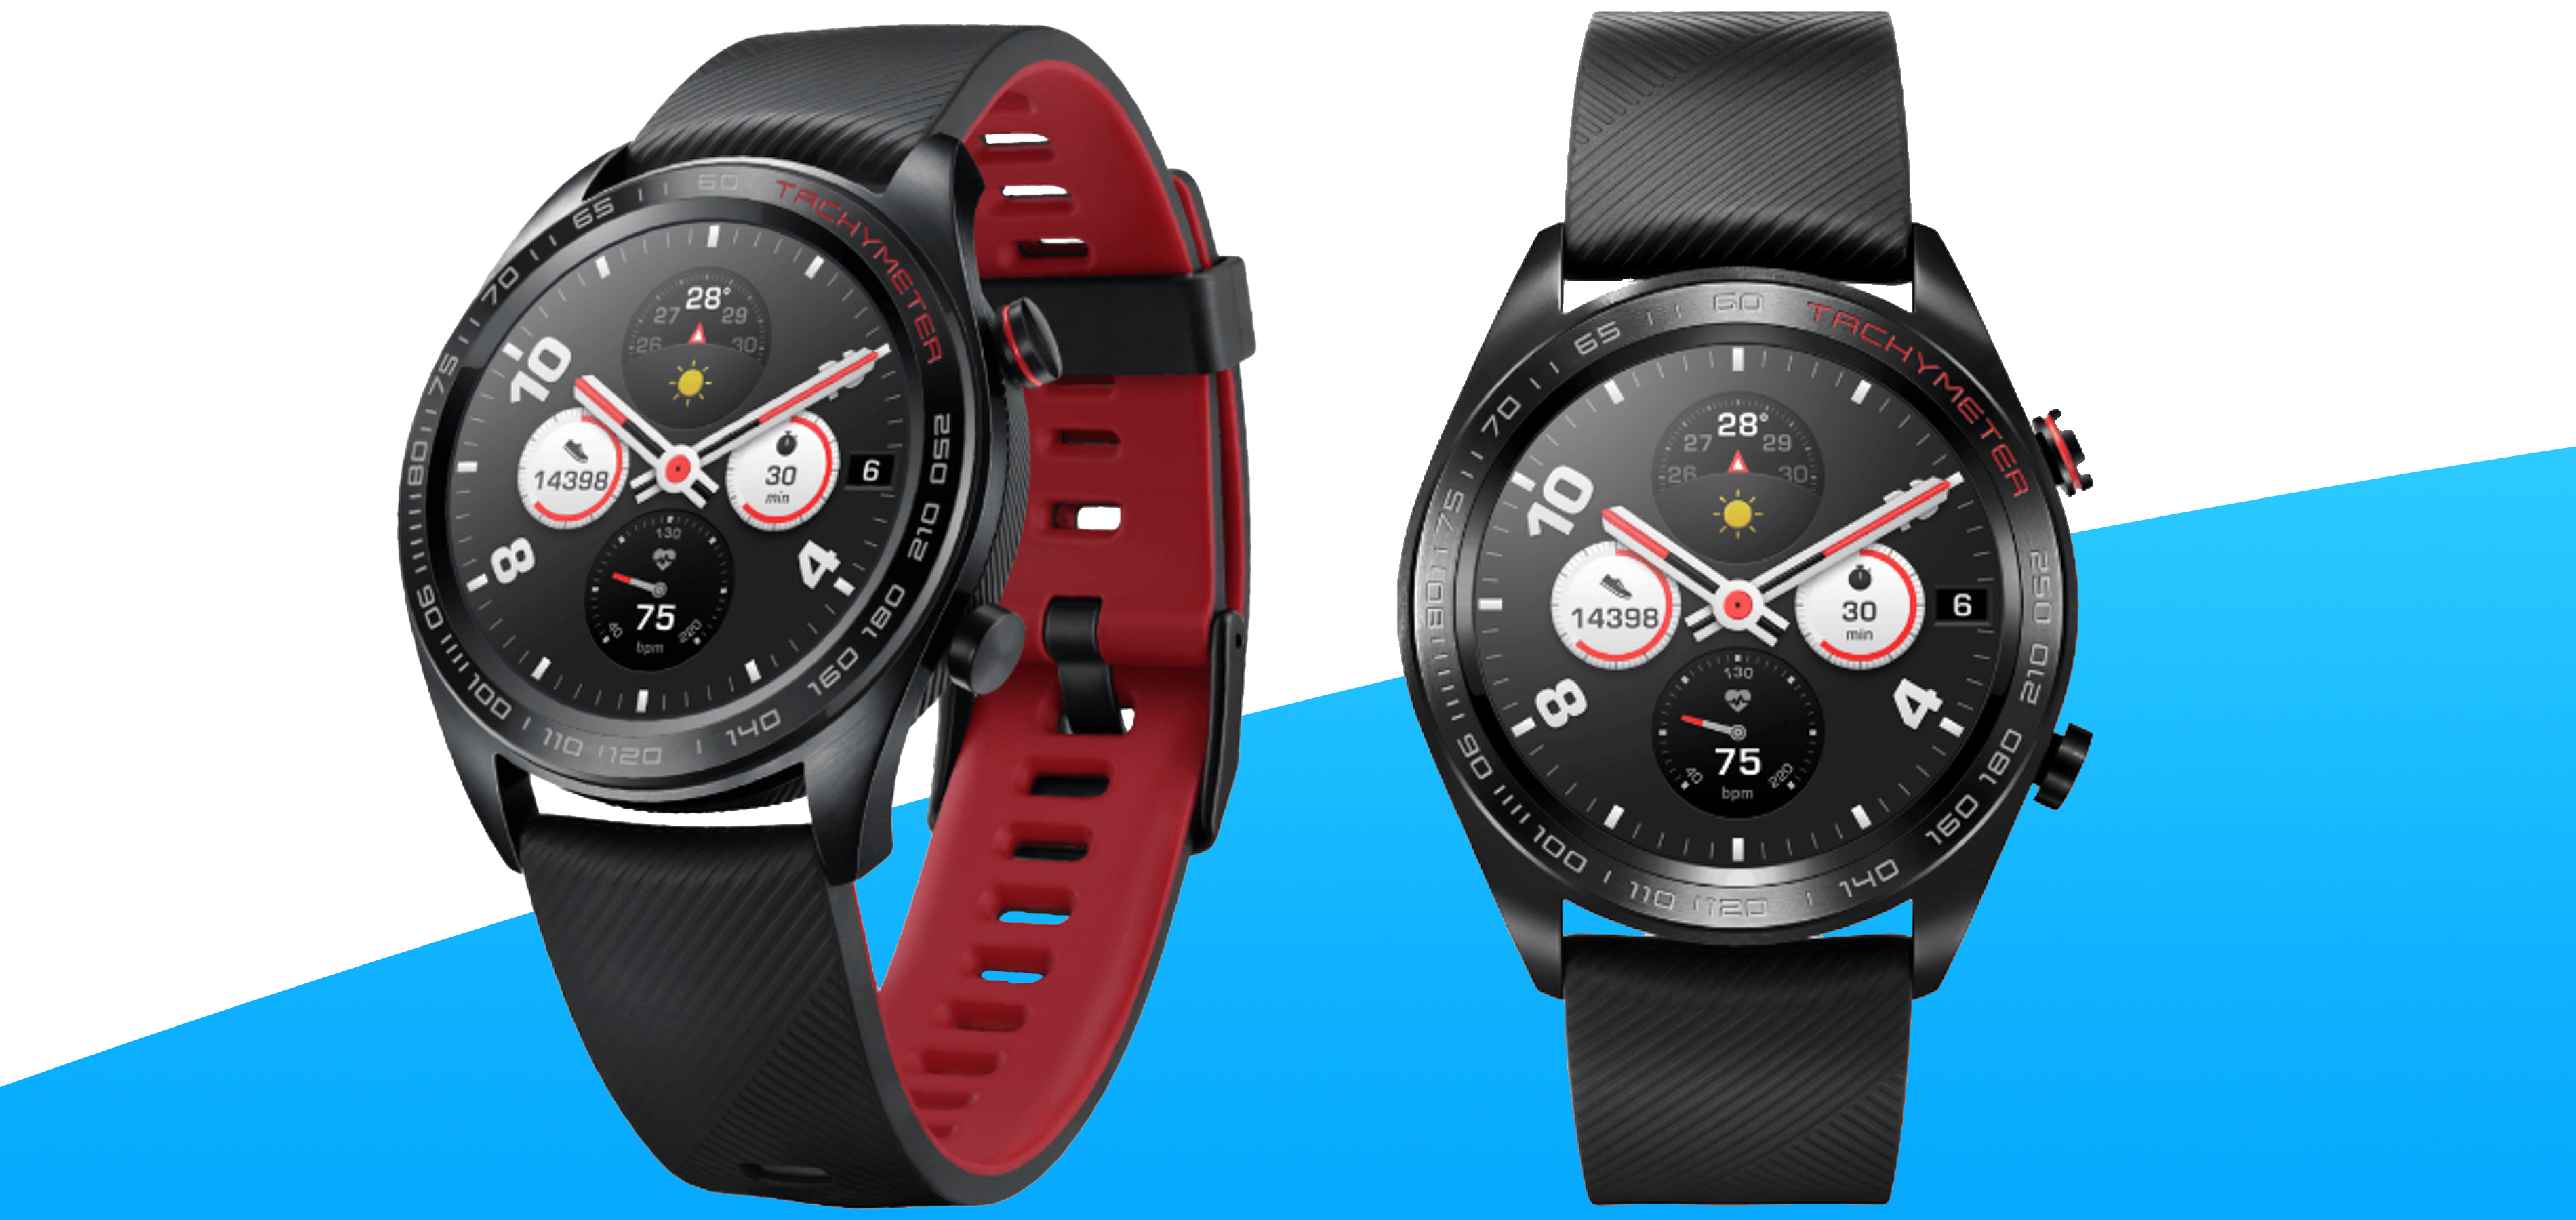 new honor smartwatch